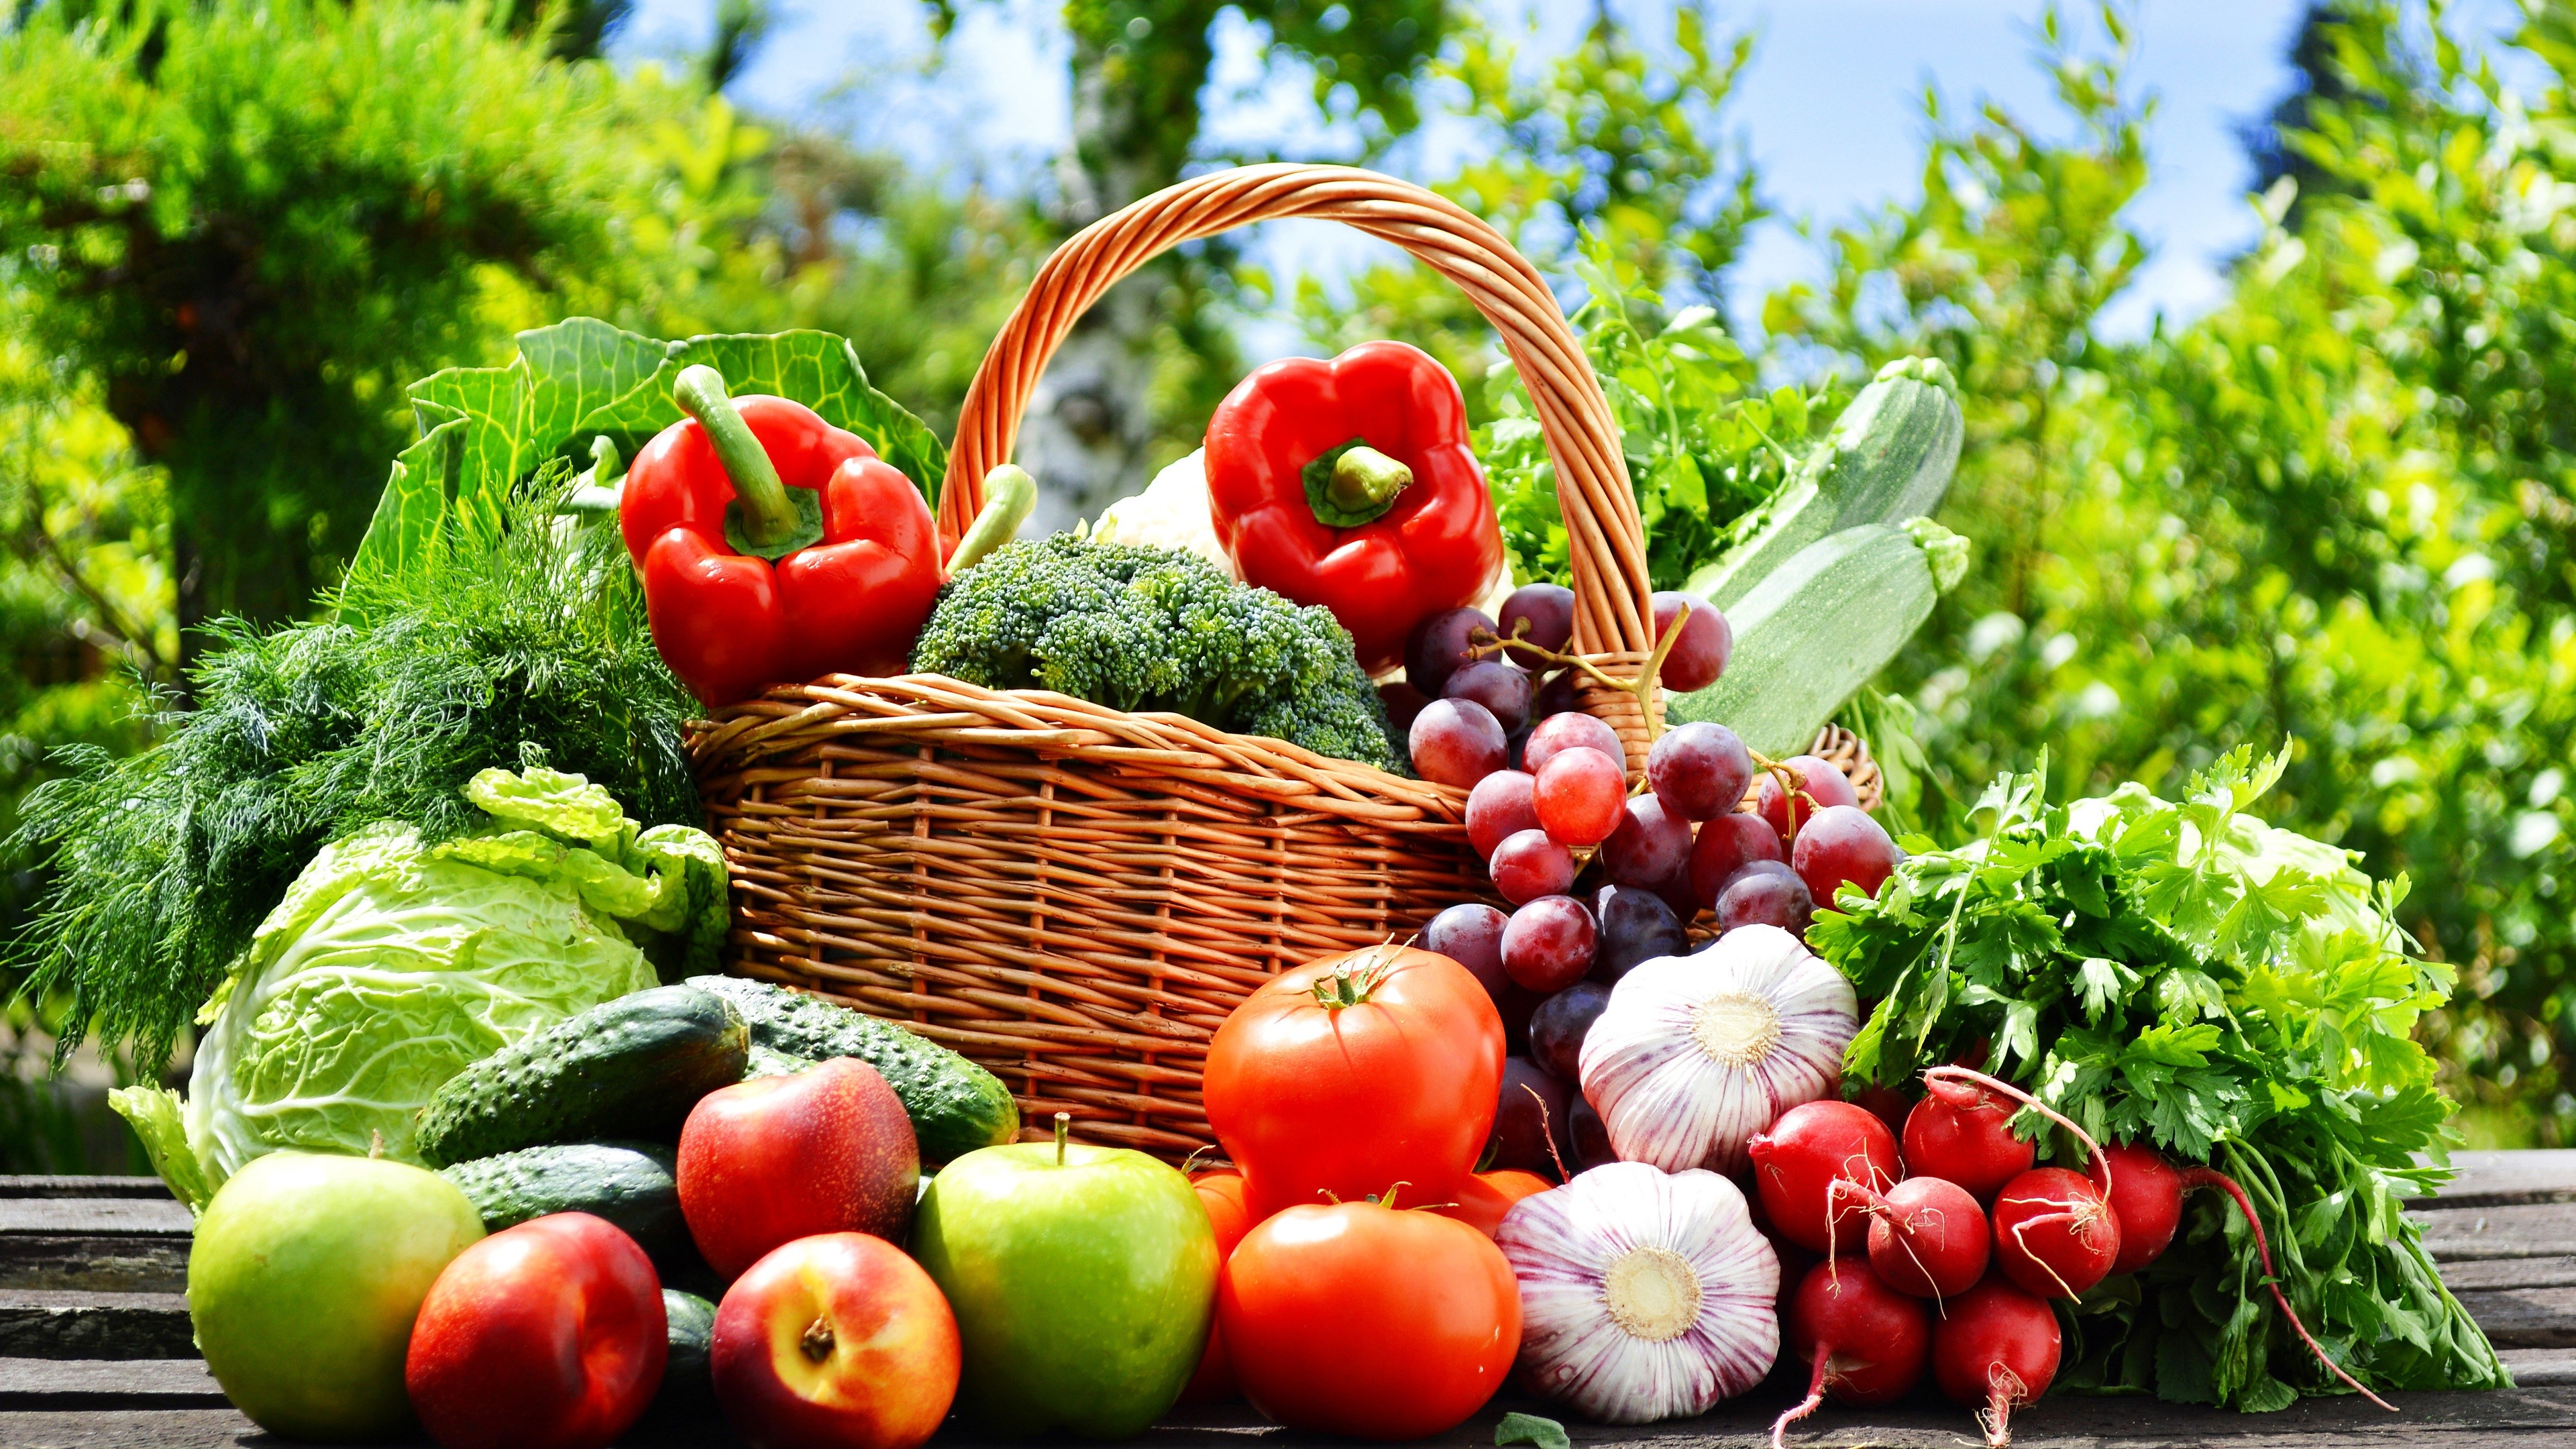 Fruits & Vegetables Wallpaper - Fruits & Vegetables Images Hd - HD Wallpaper 